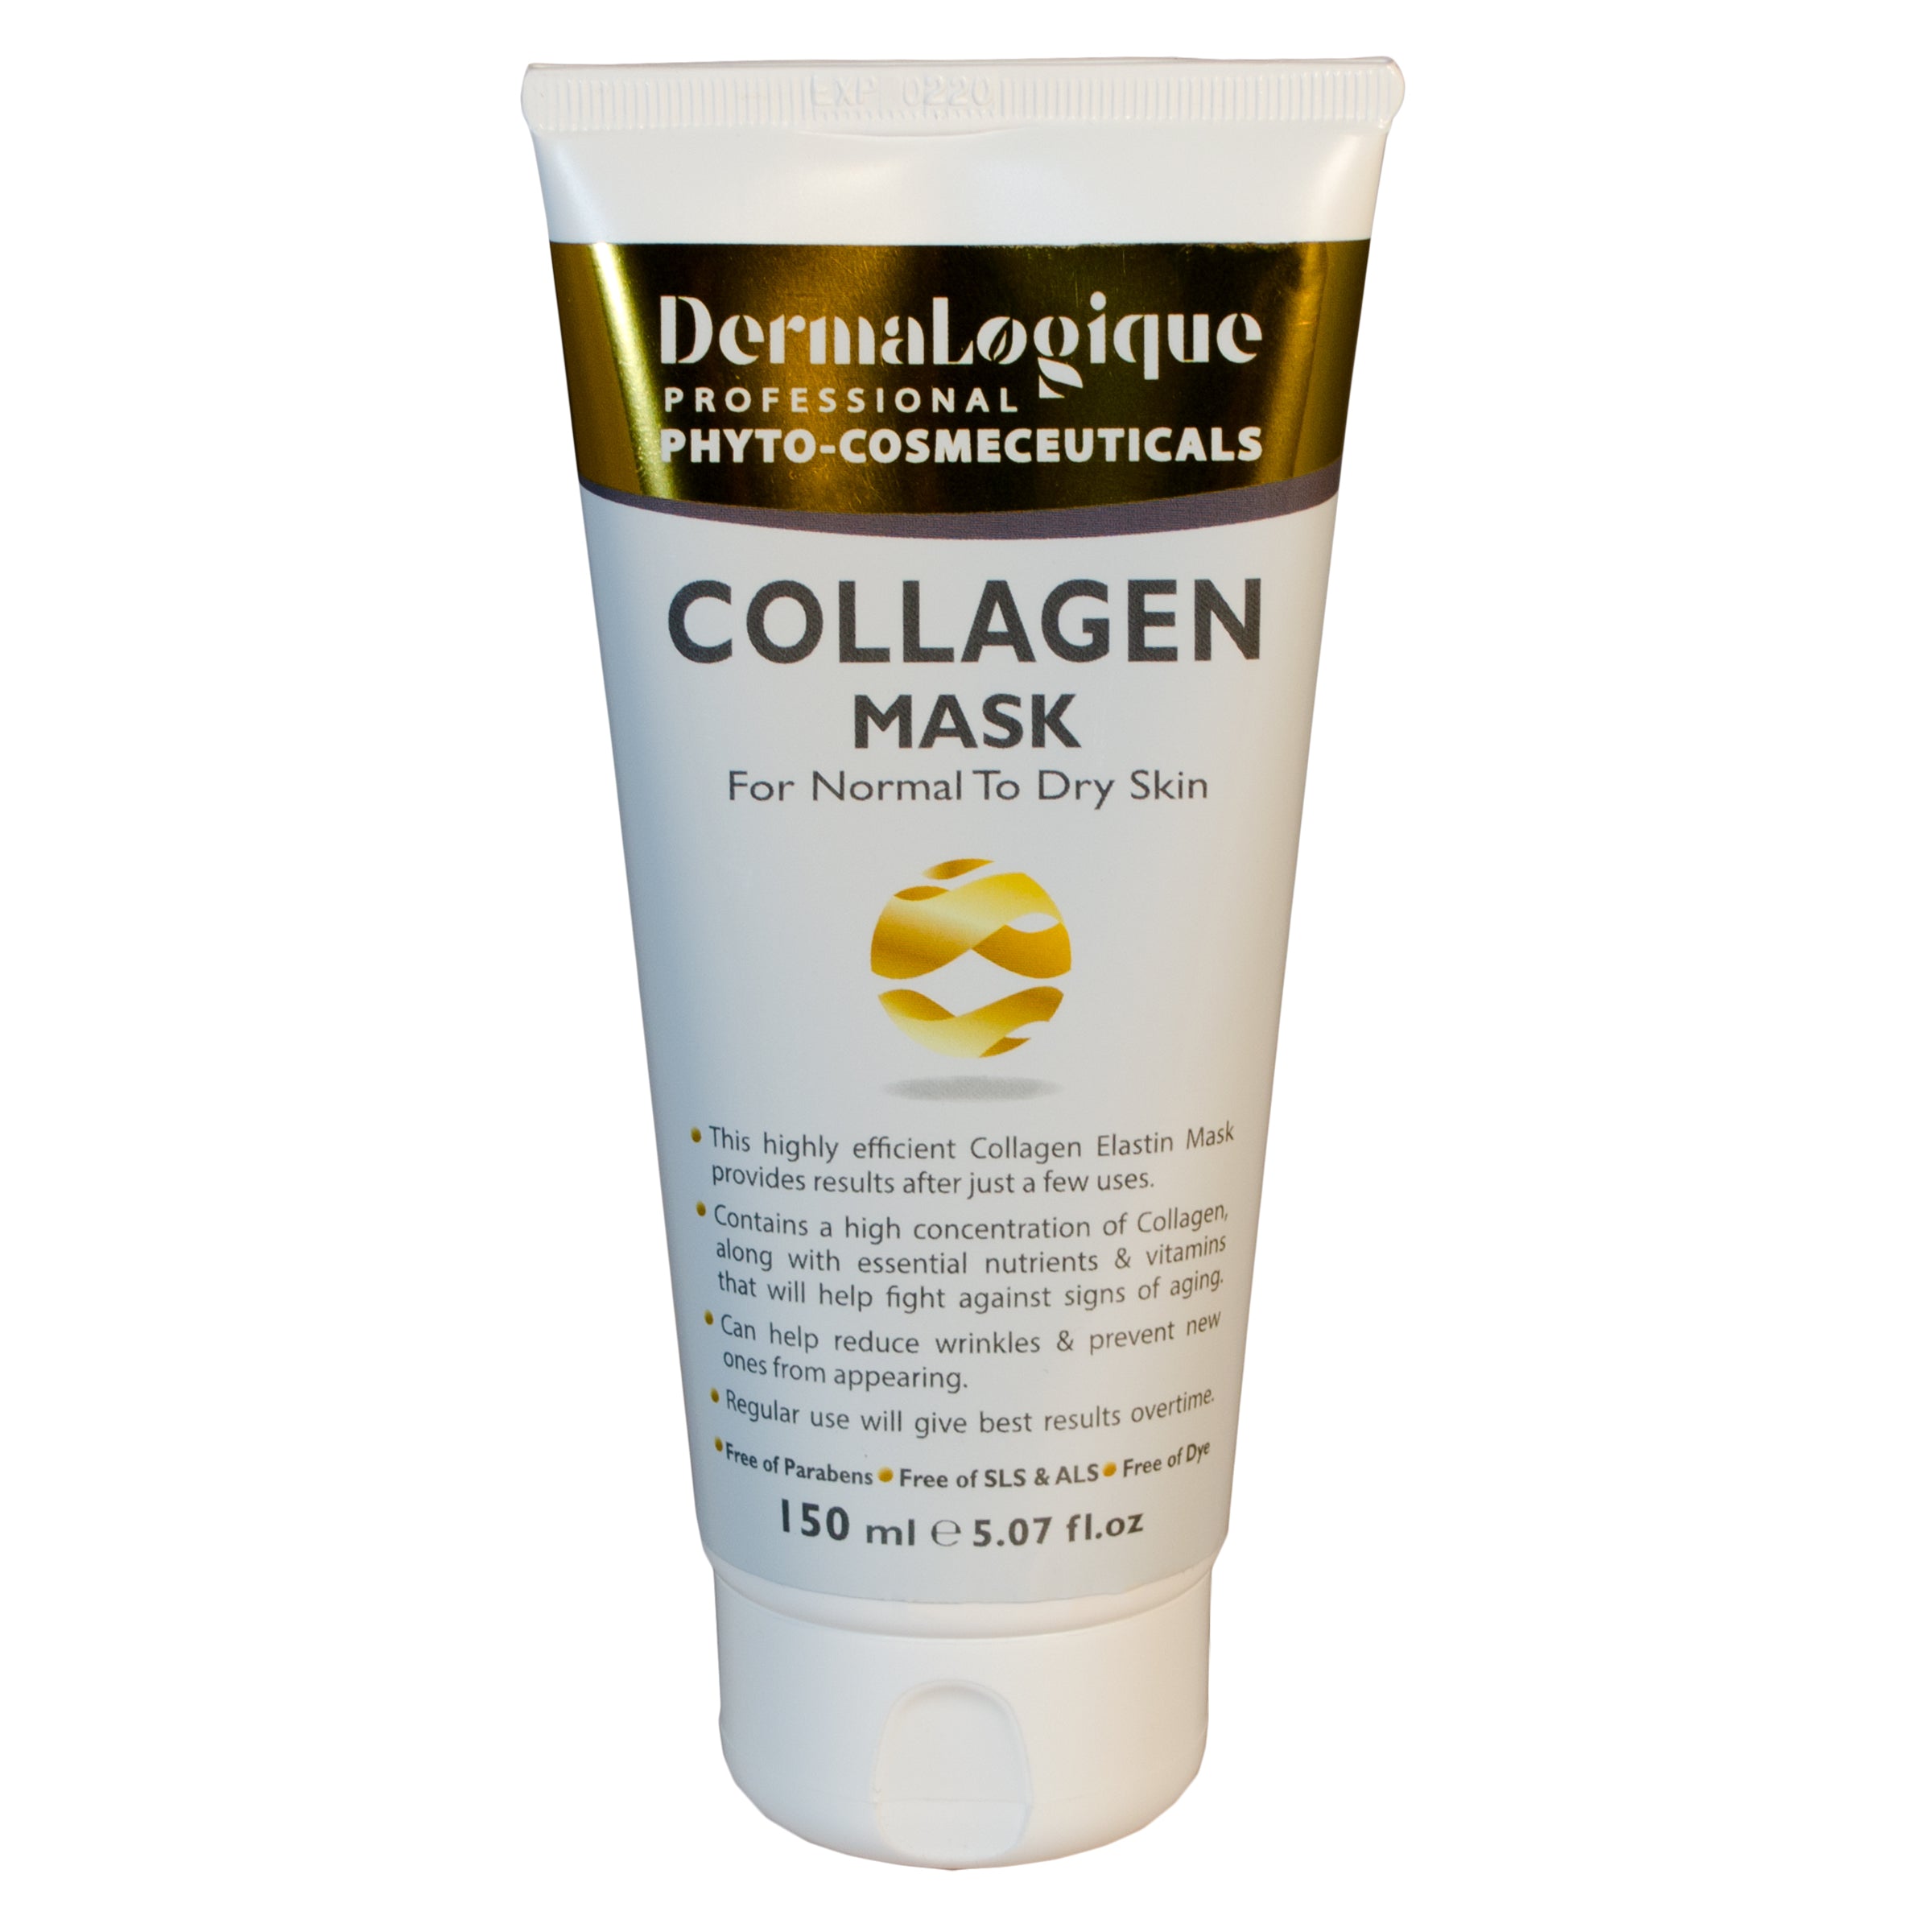 DermaLogique Collagen facial Mask – for normal to dry skin